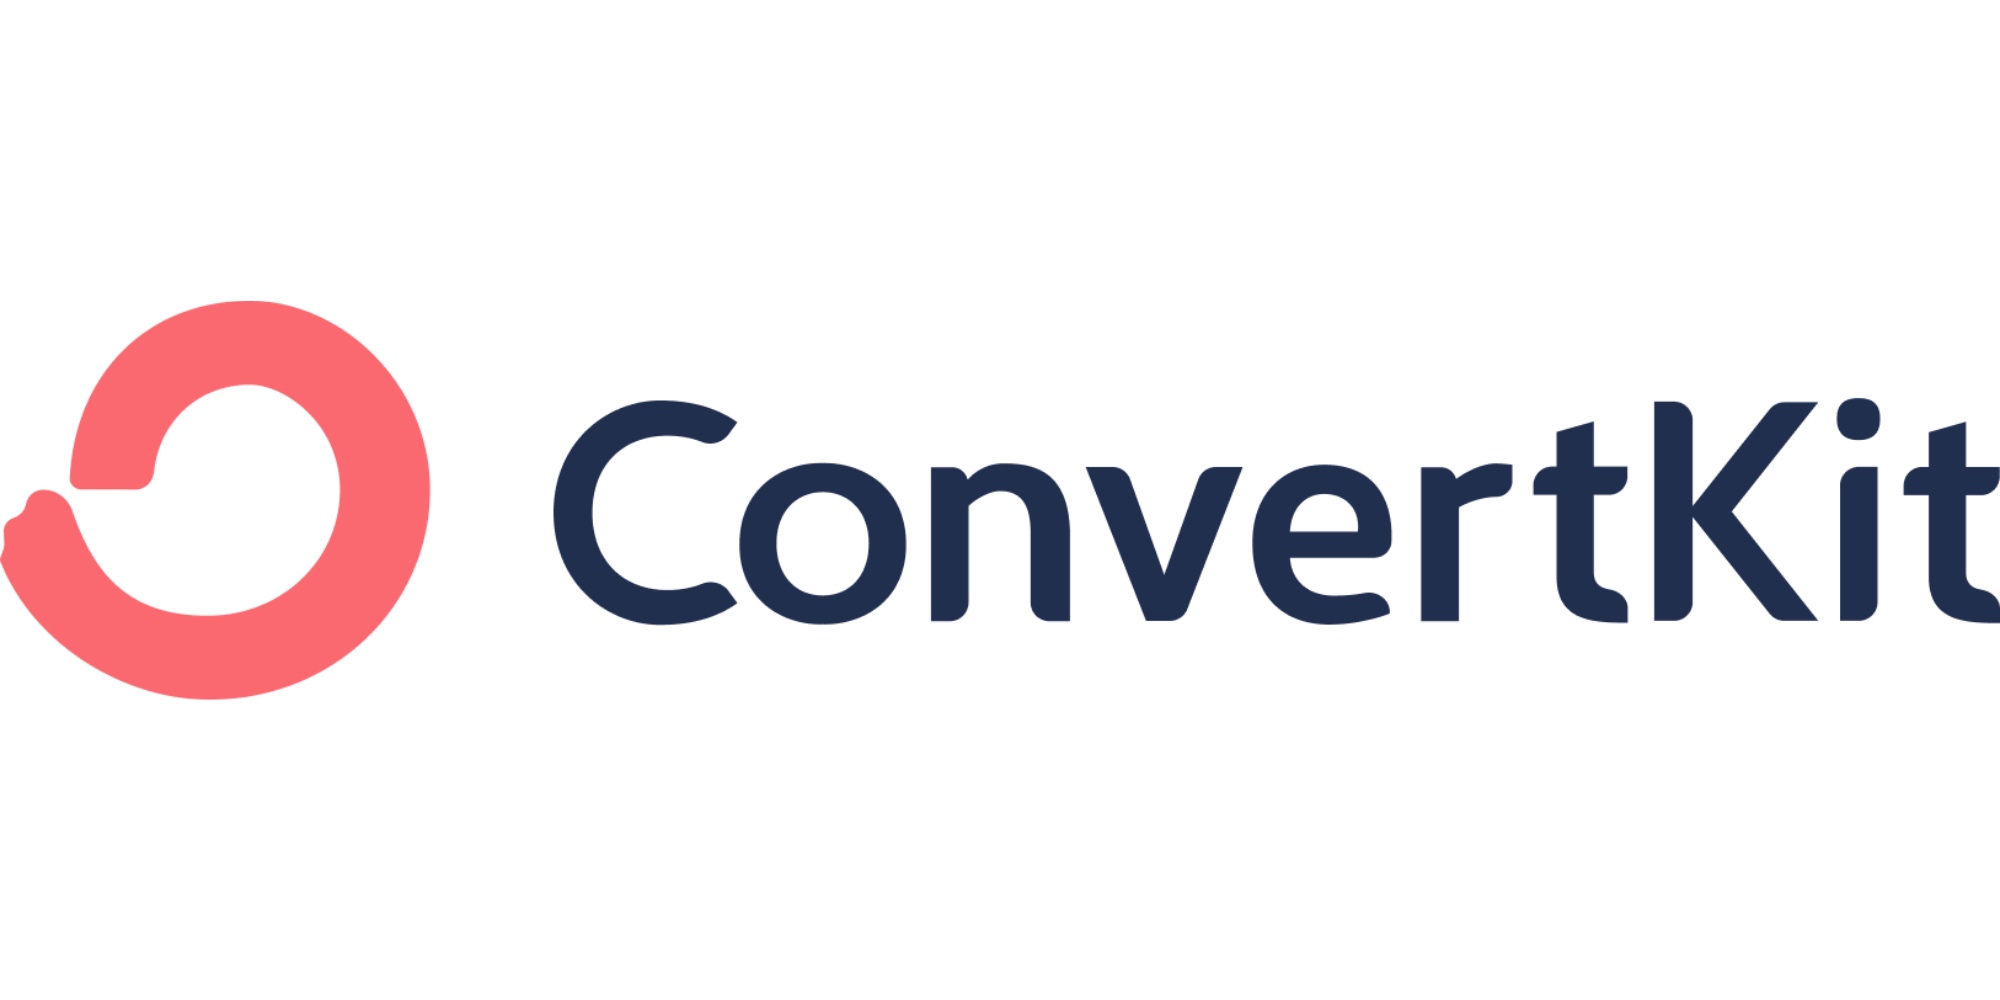 ConvertKit is a great Mailchimp alternative for nonprofits